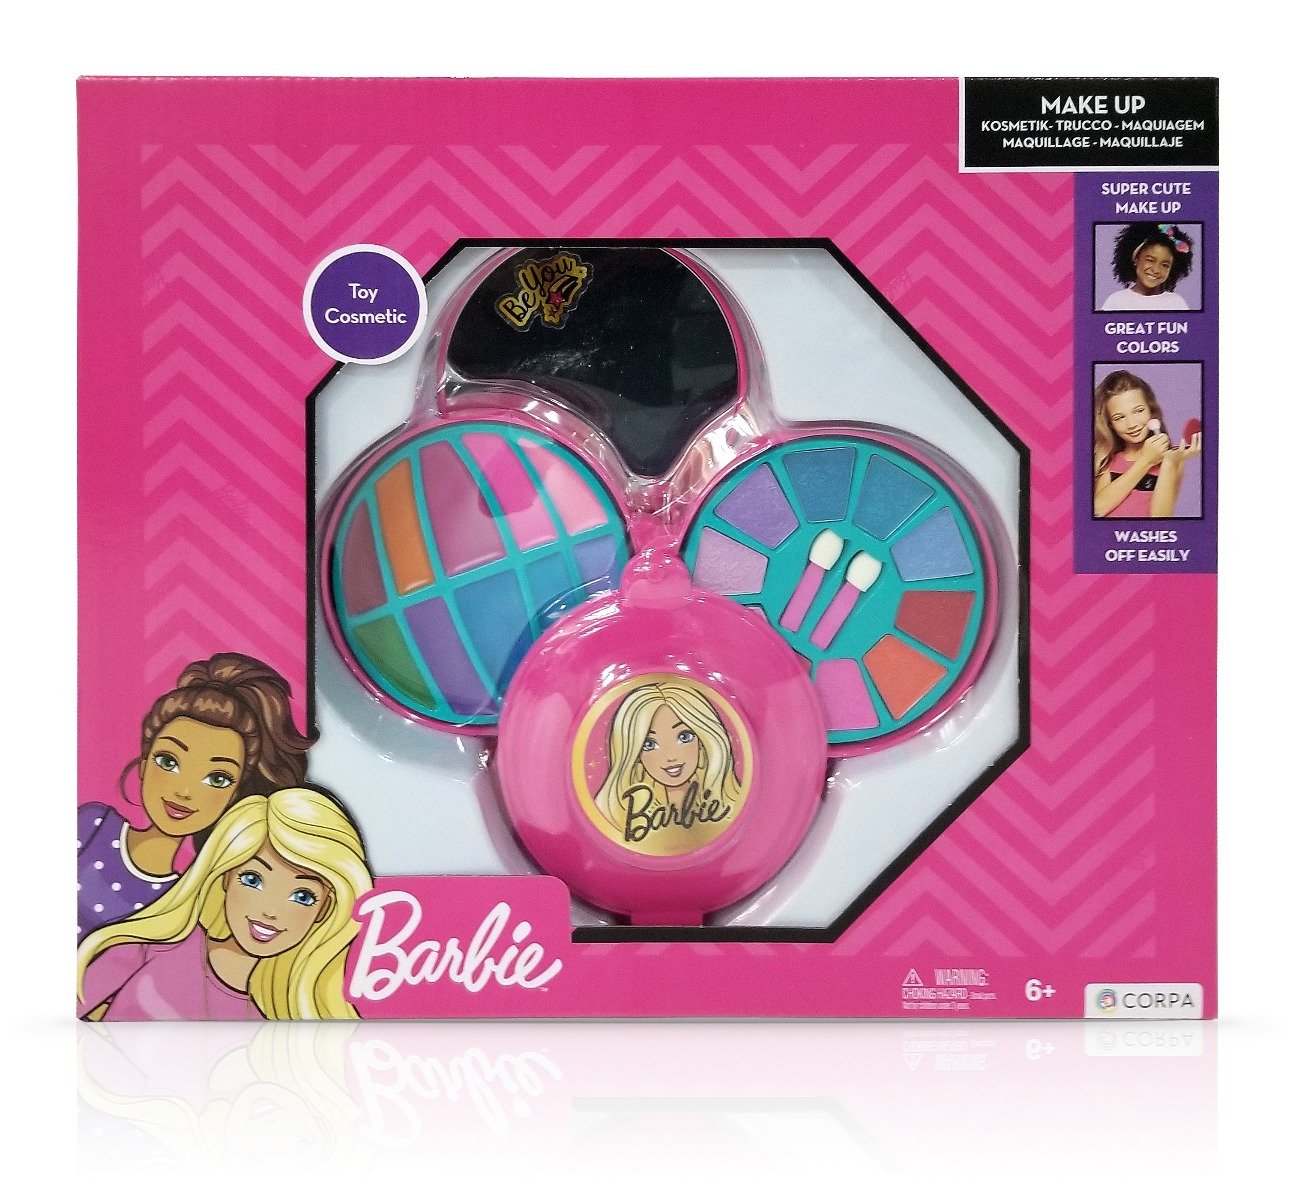 Set de cosmetice in caseta rotunda, cu 3 niveluri, Barbie Barbie imagine 2022 protejamcopilaria.ro